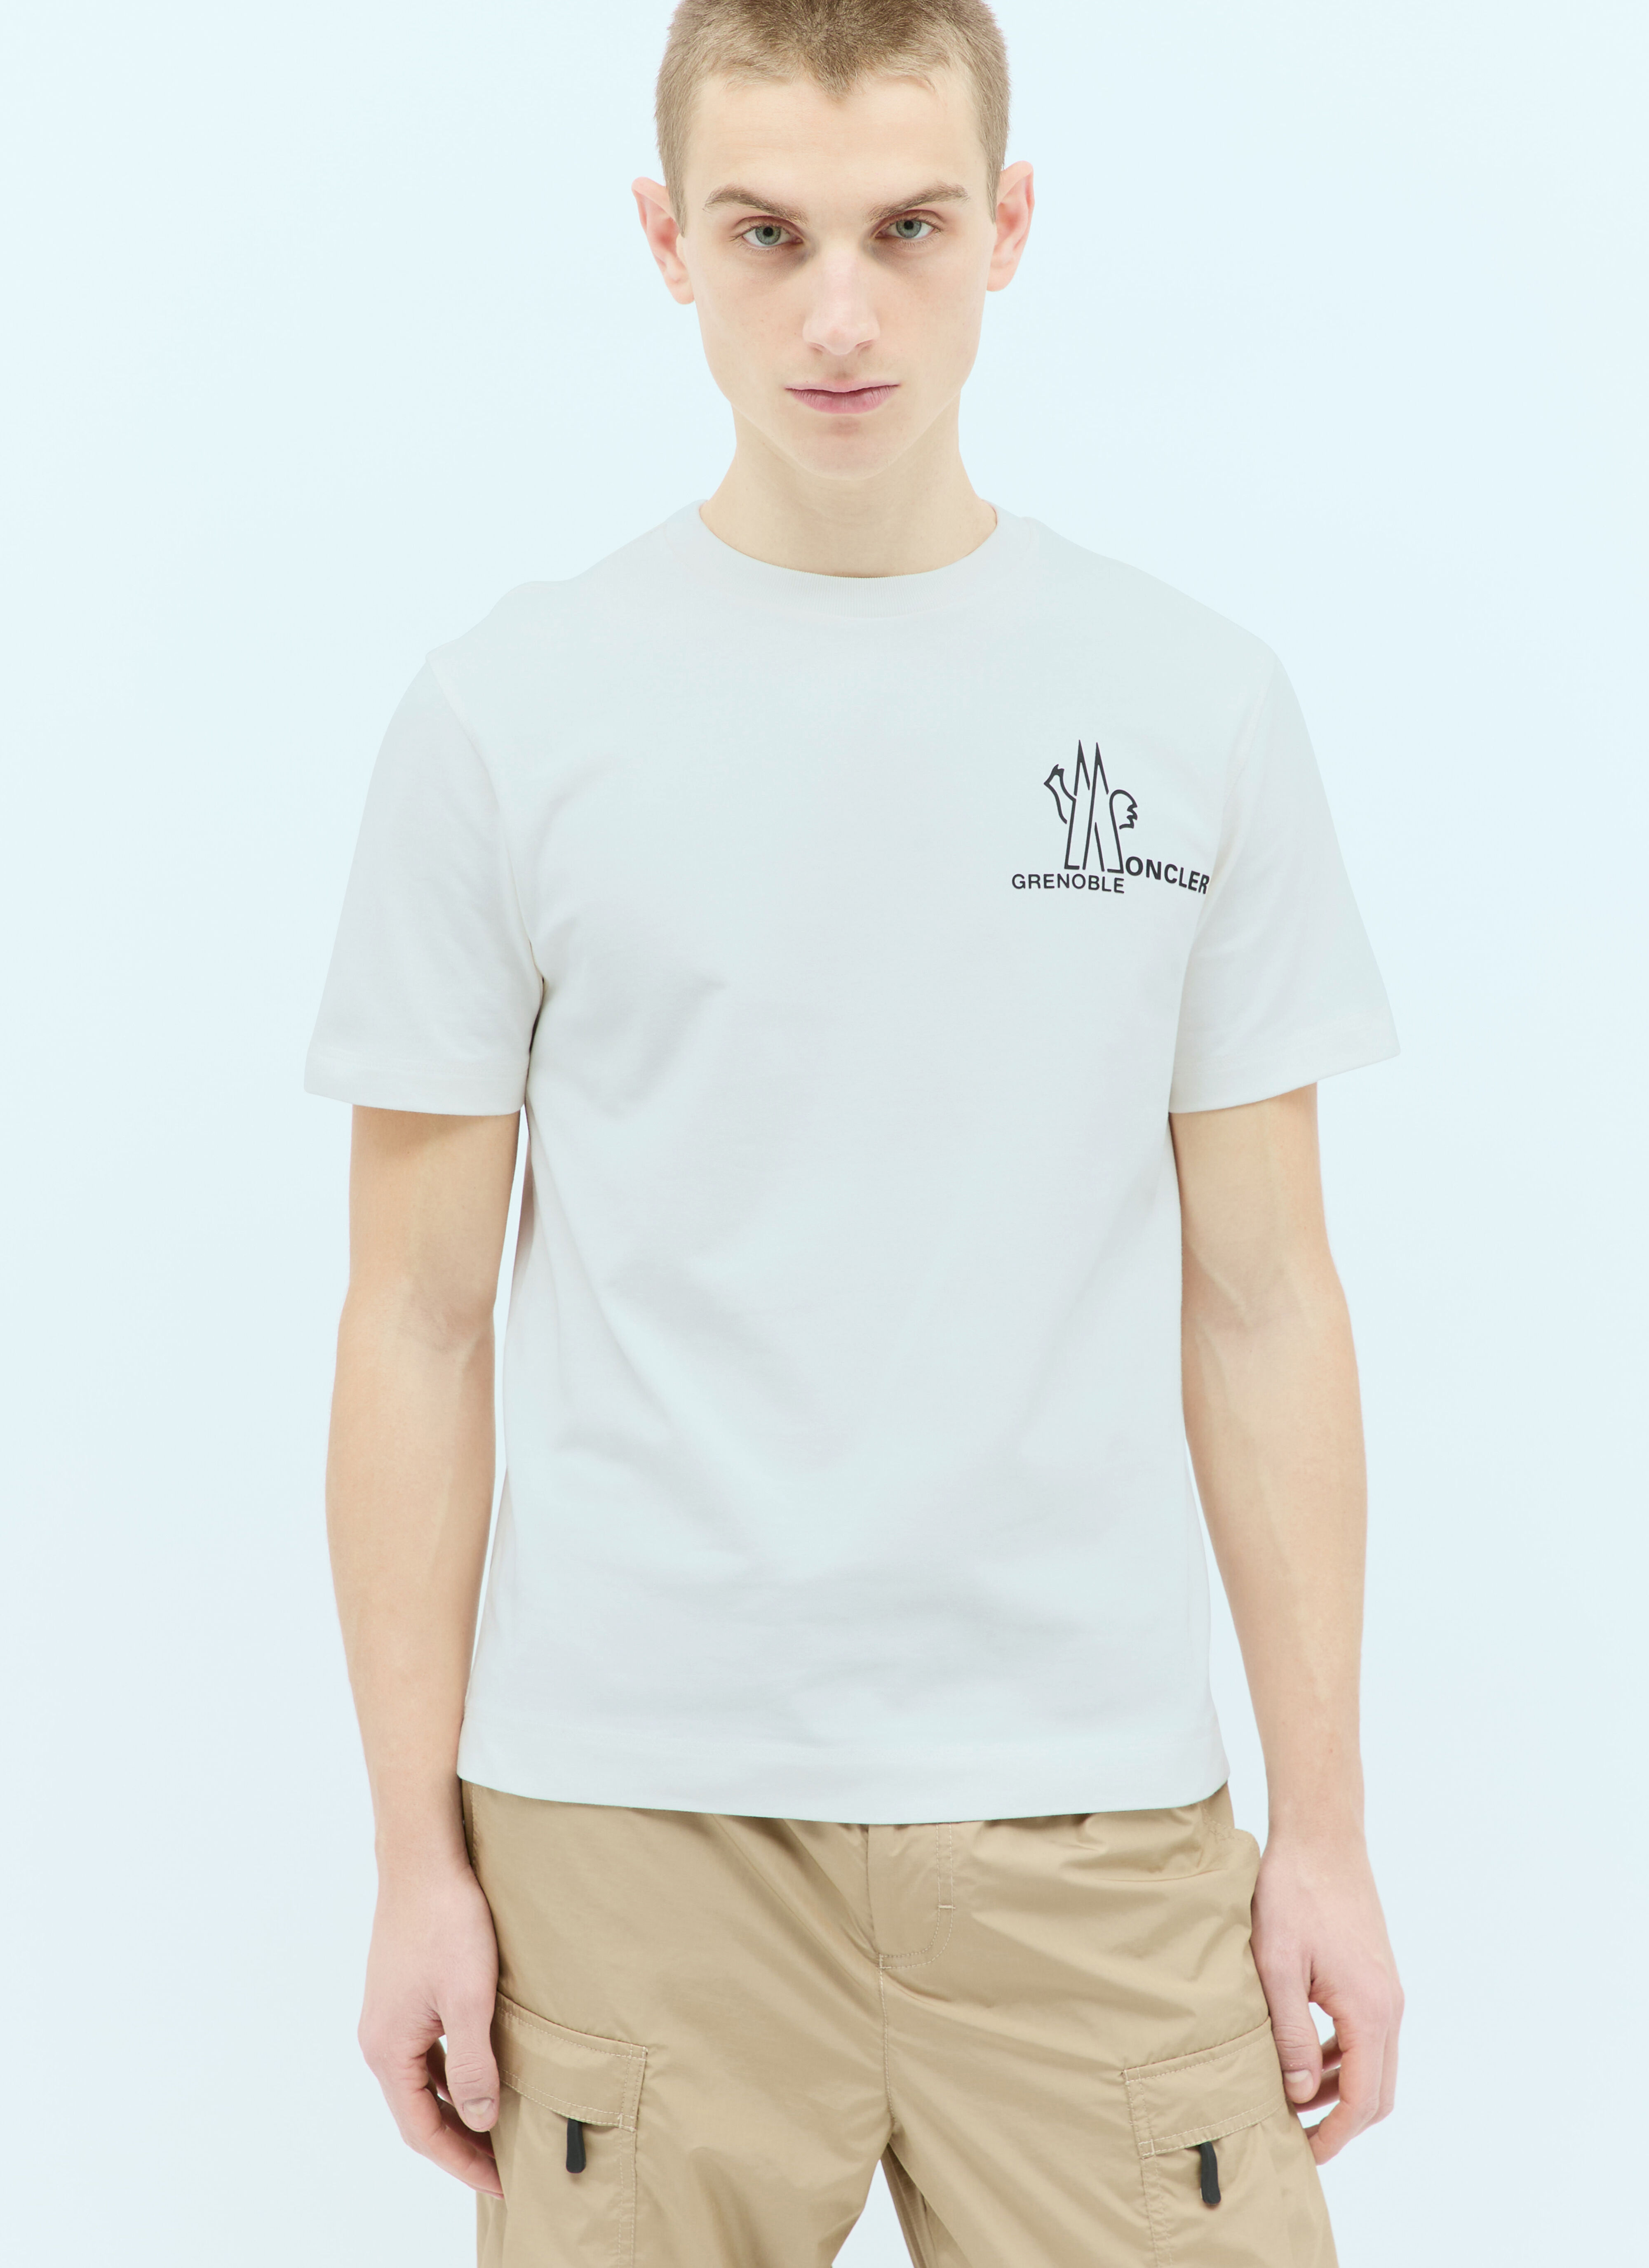 Moncler Grenoble ロゴアップリケTシャツ ブラウン mog0155002